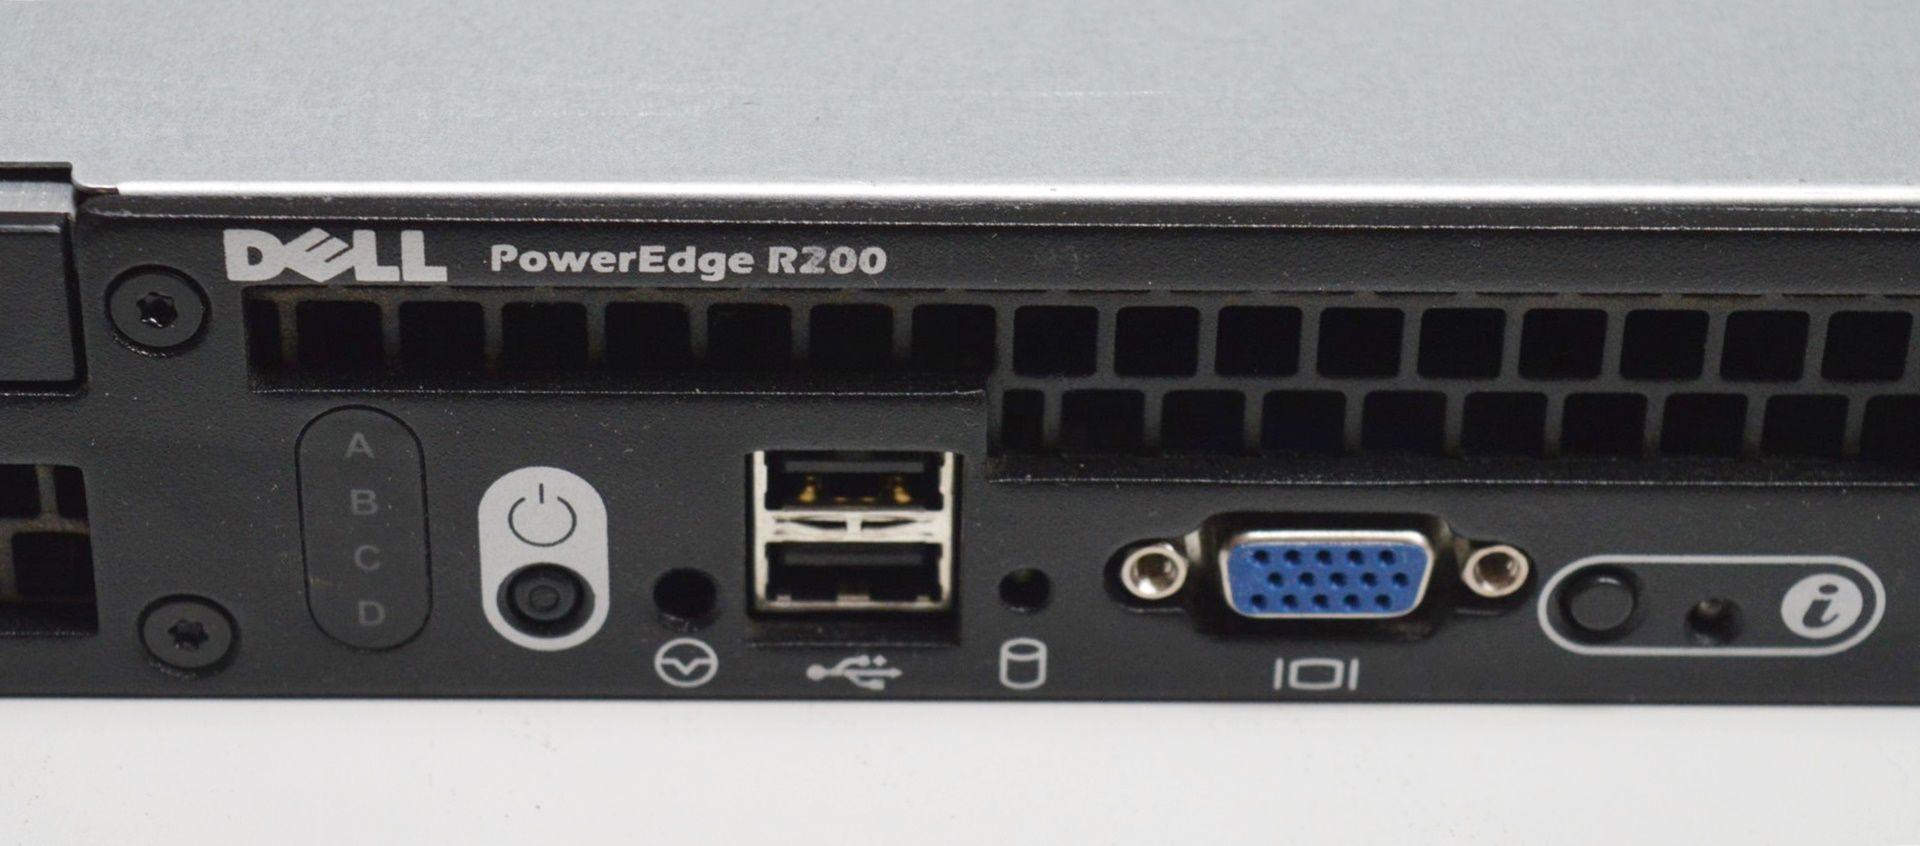 1 x Dell PowerEdge R200 Rack Server With Xeon Quad Core Processor, 4gb Ram and Windows Server 2008 - Image 6 of 7